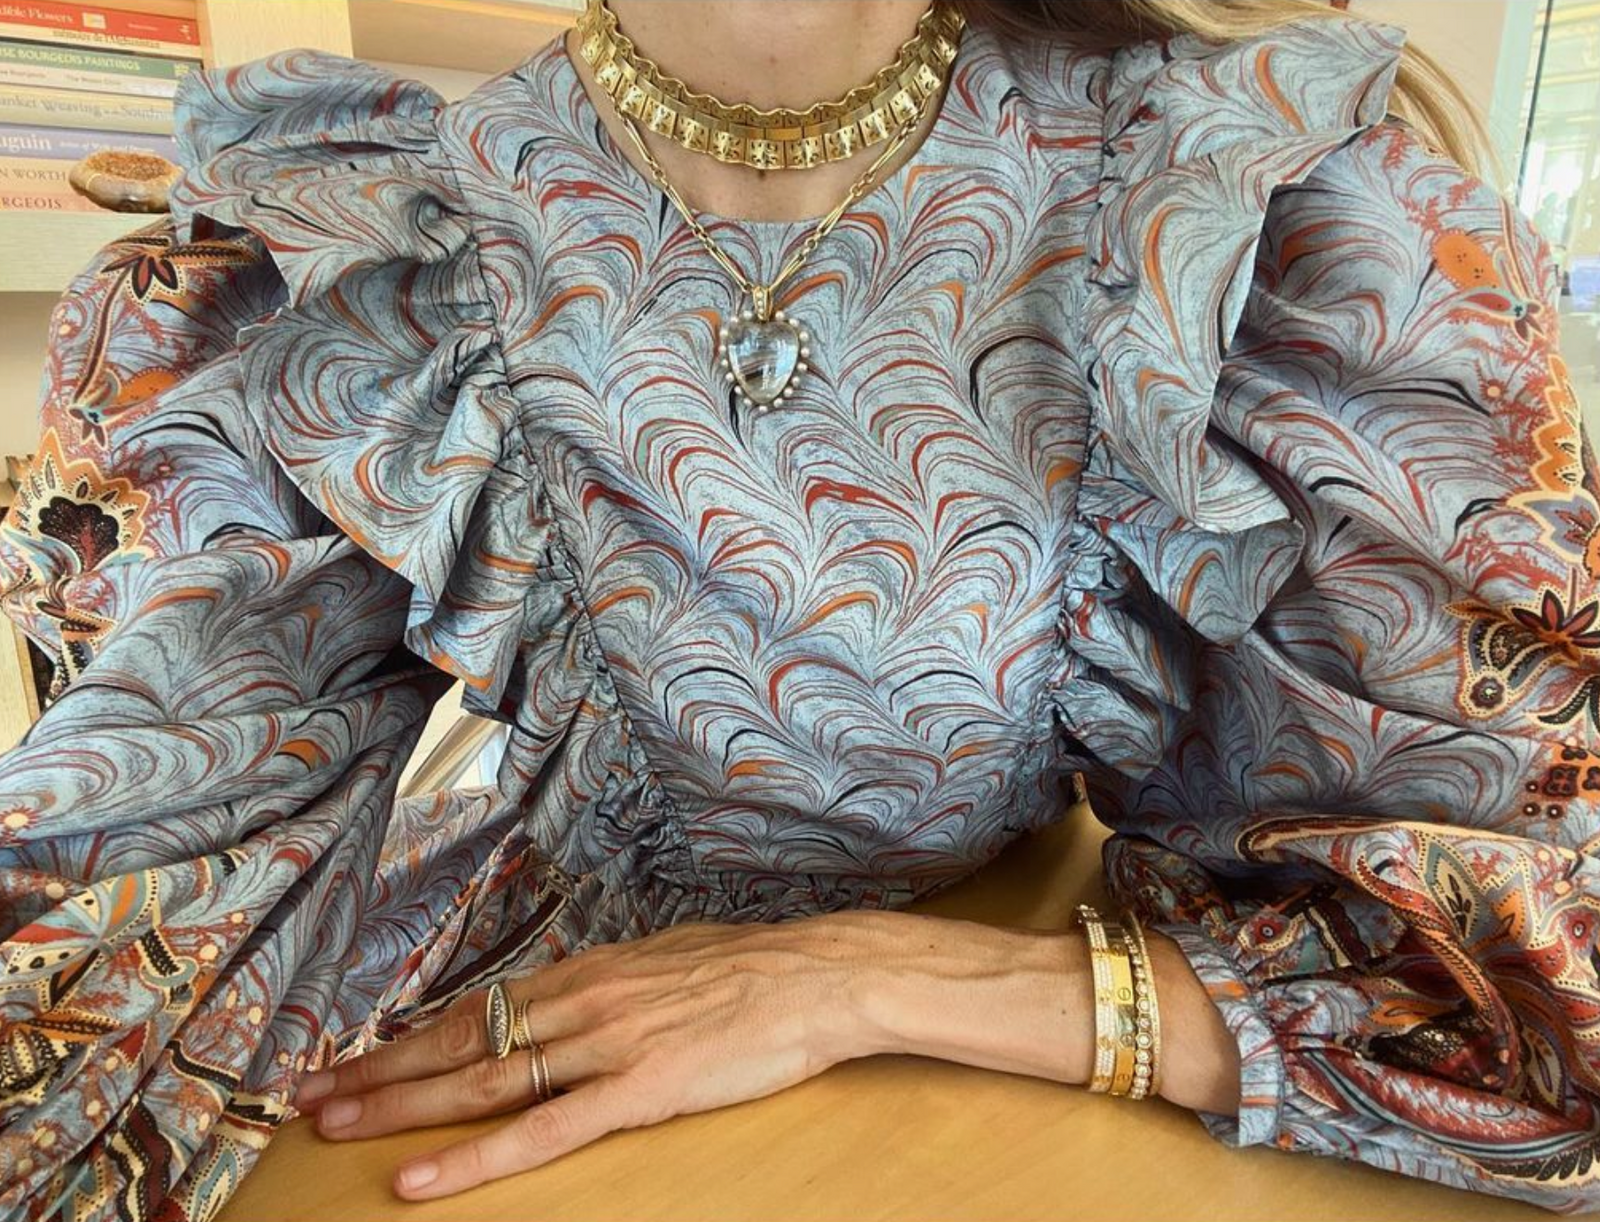 Designer Ulla Johnson talks Jewelry and Kentshire with Vogue